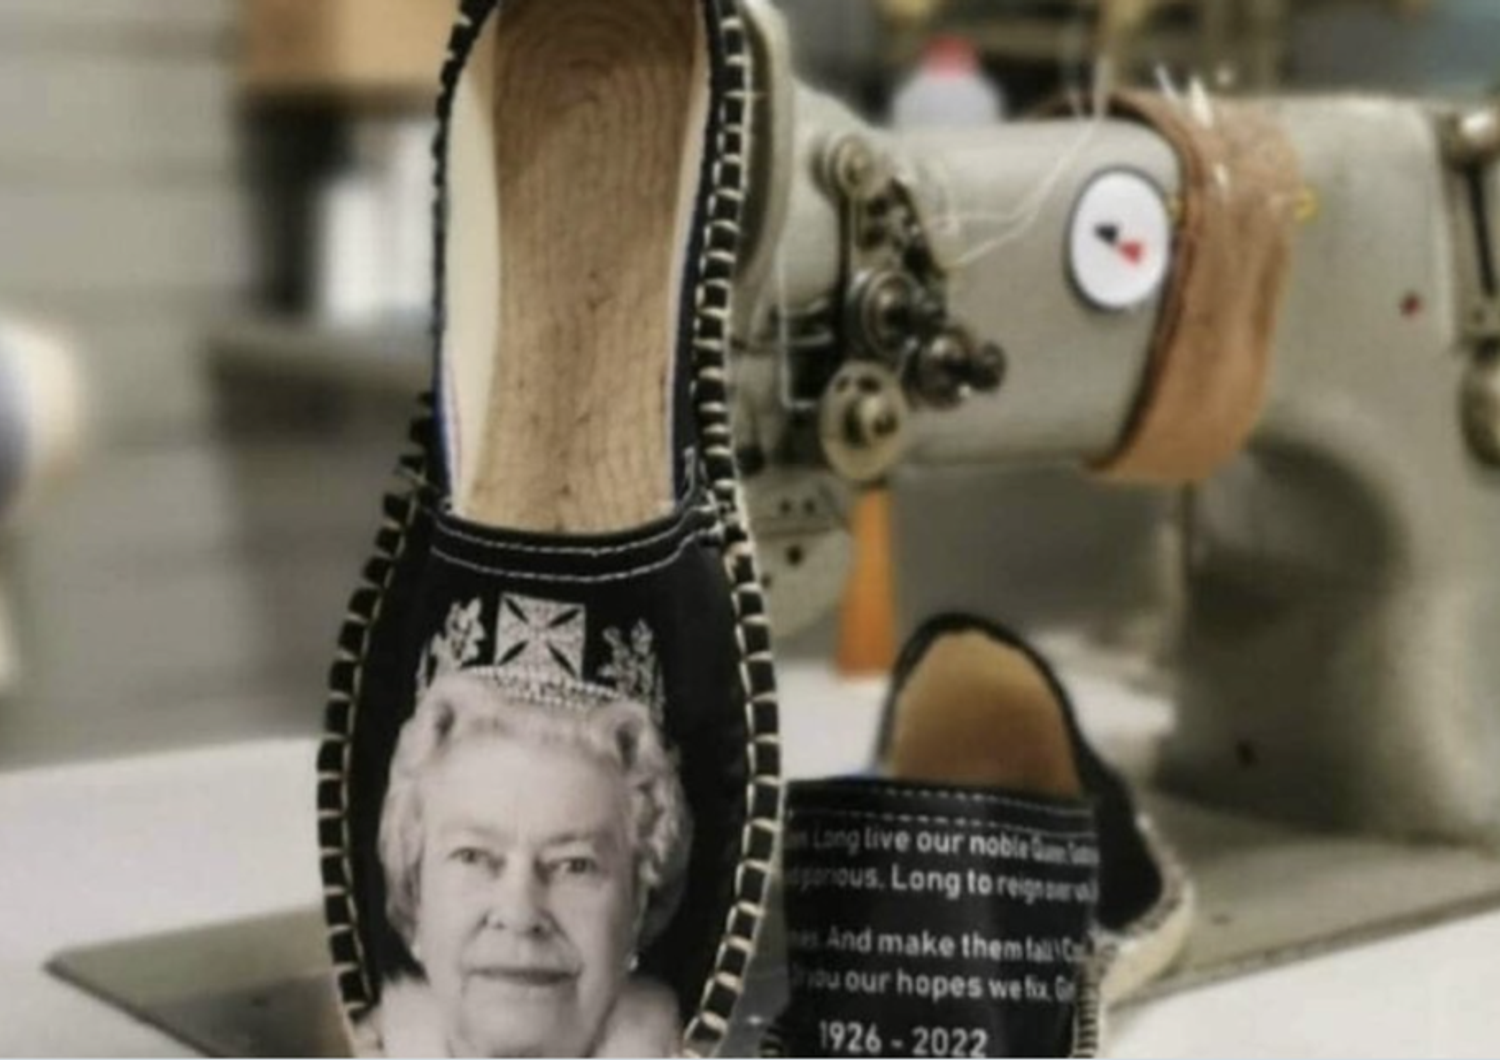 Scarpe dedicate alla regina Elisabetta&nbsp;